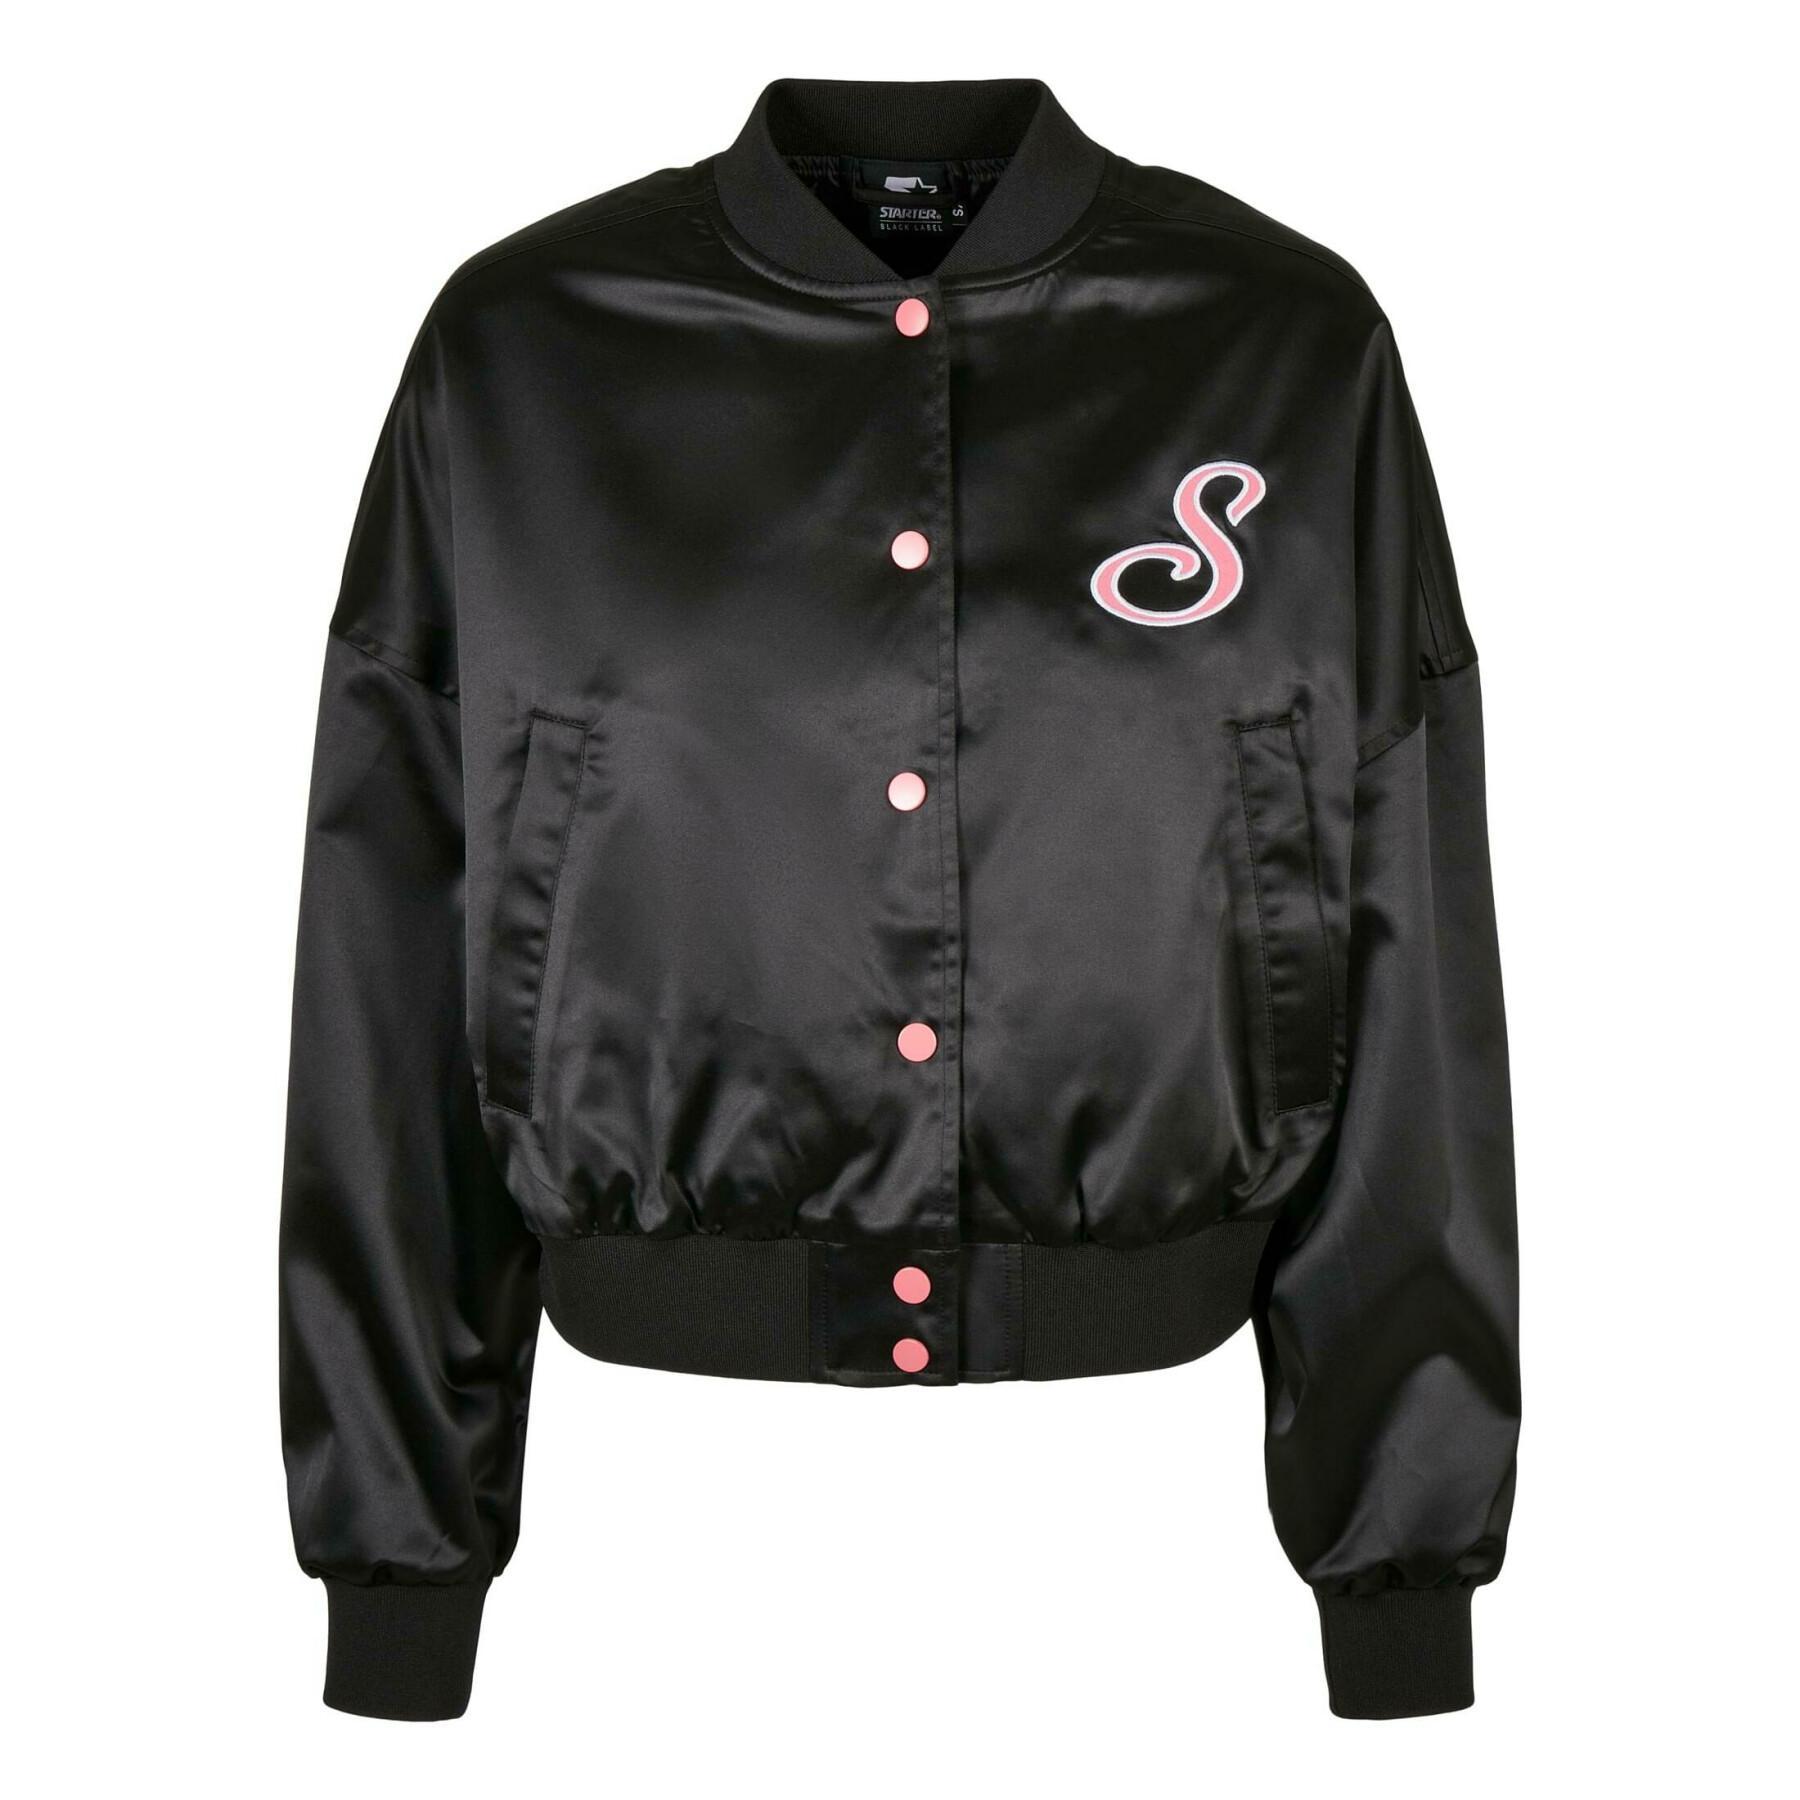 Starter college & urban - woman - Jackets jacket Clothing - Satin Women classics Coats